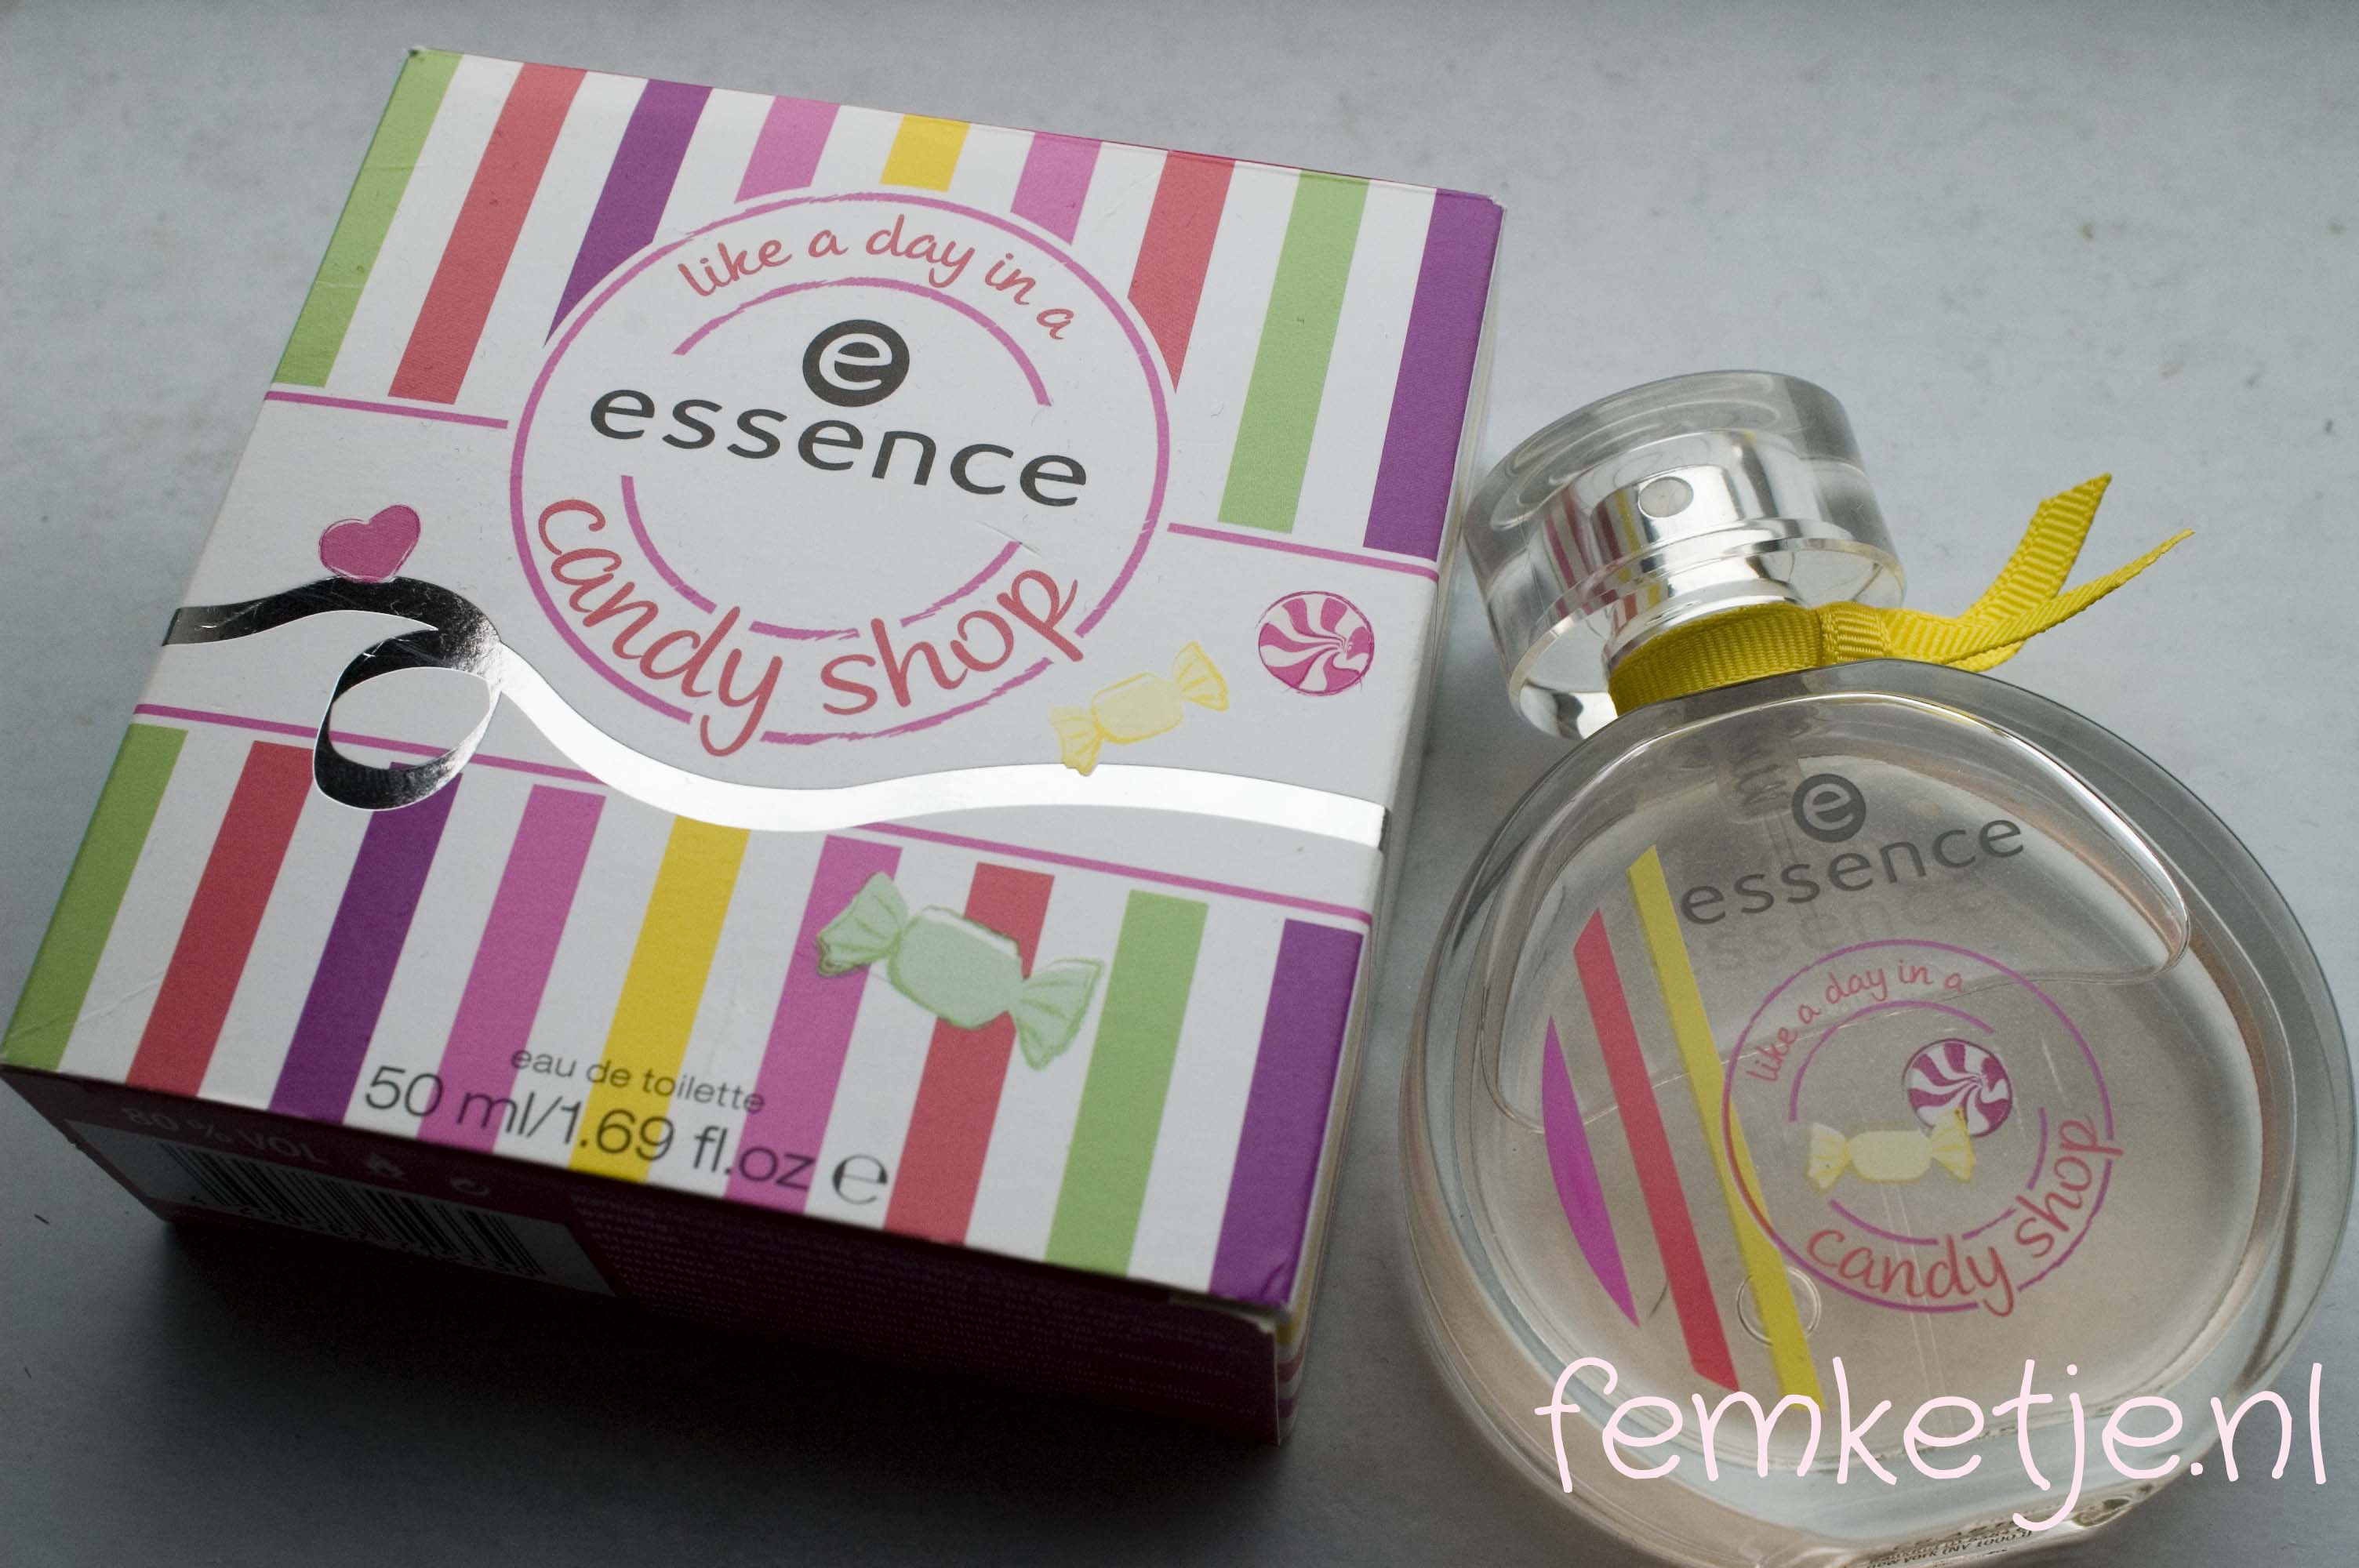 essence candy shop perfume